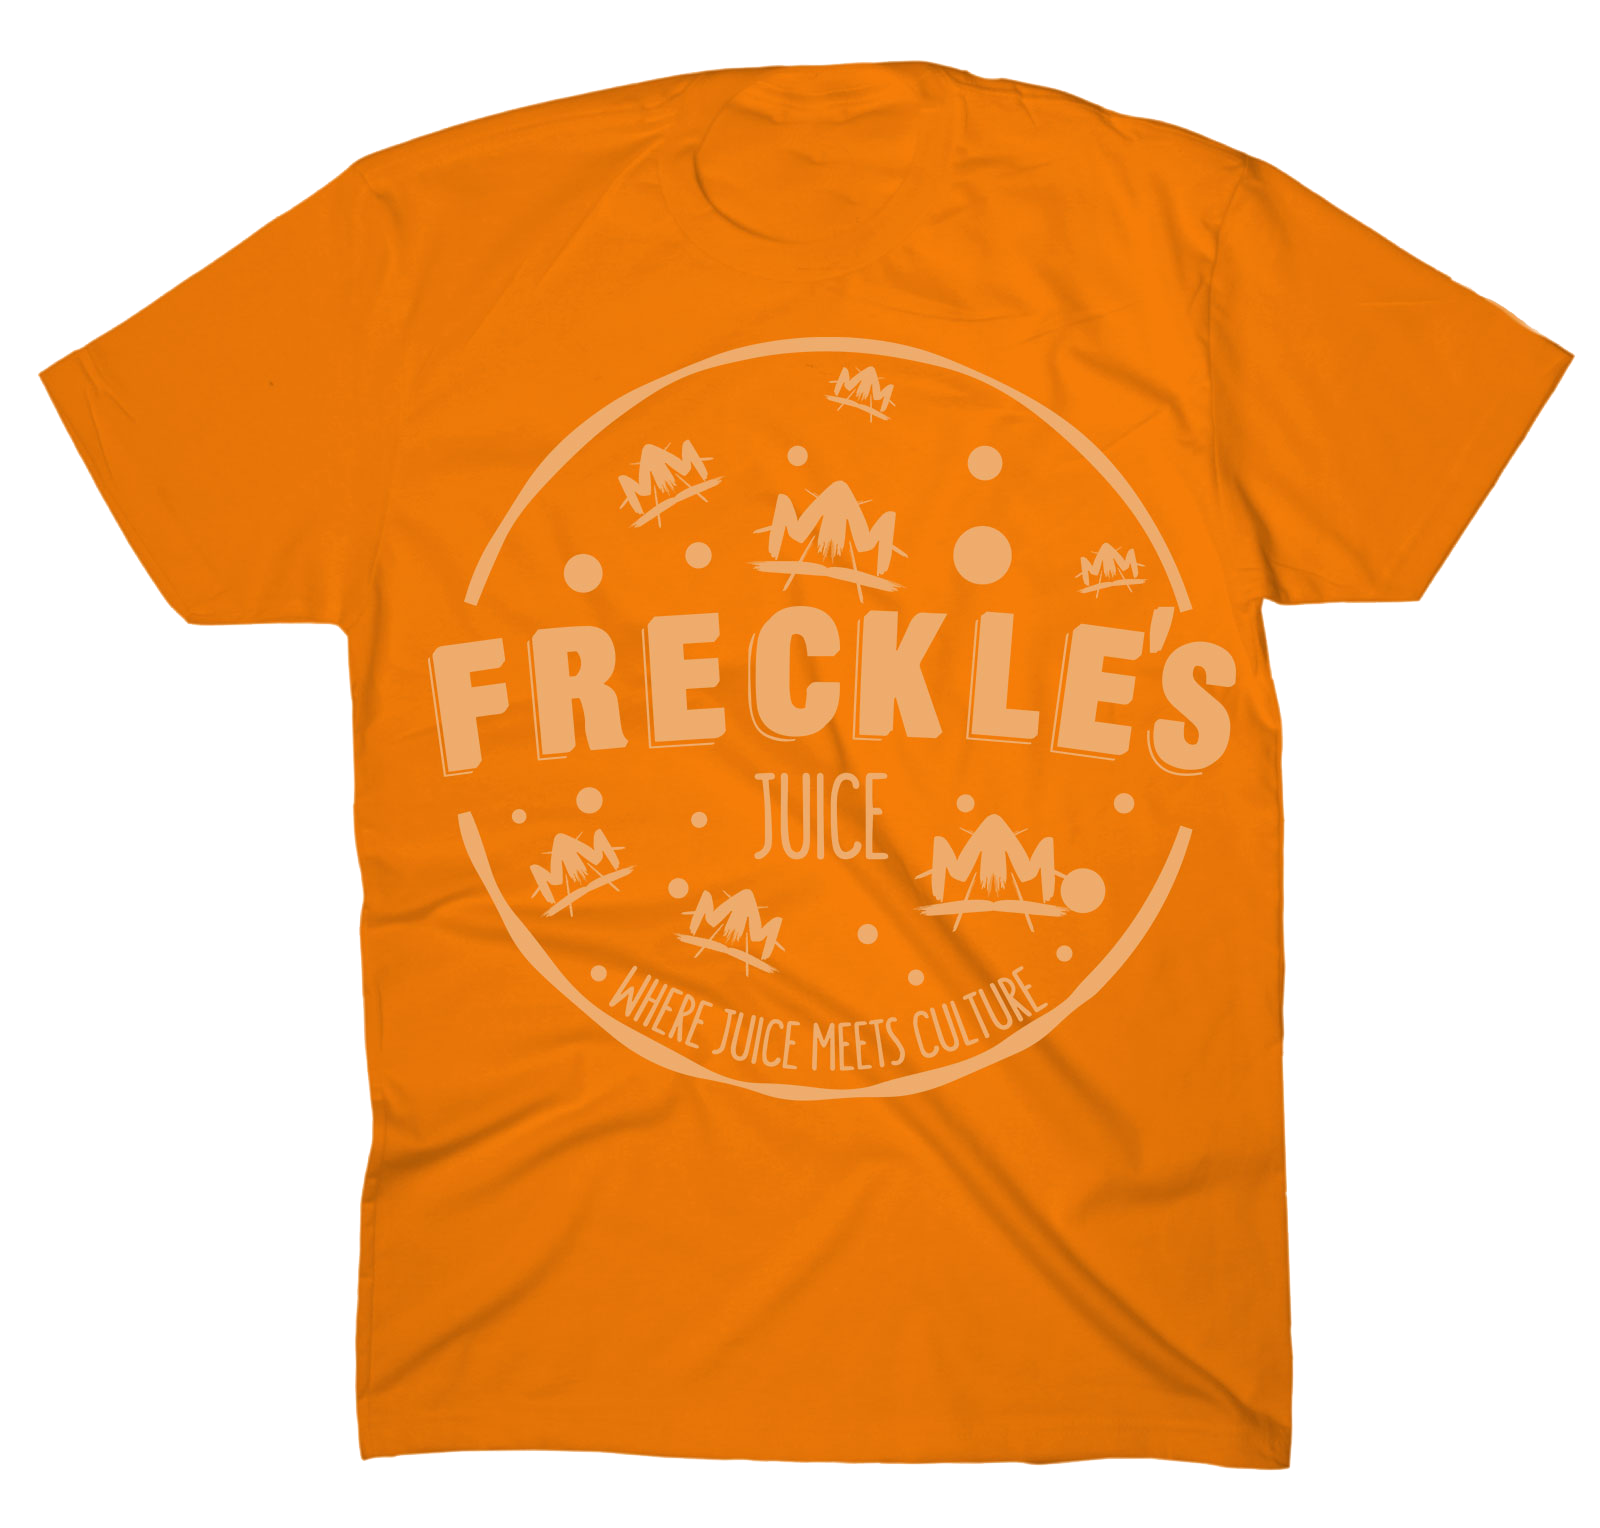 Freckles x MM Shirt - Signedbymcfly